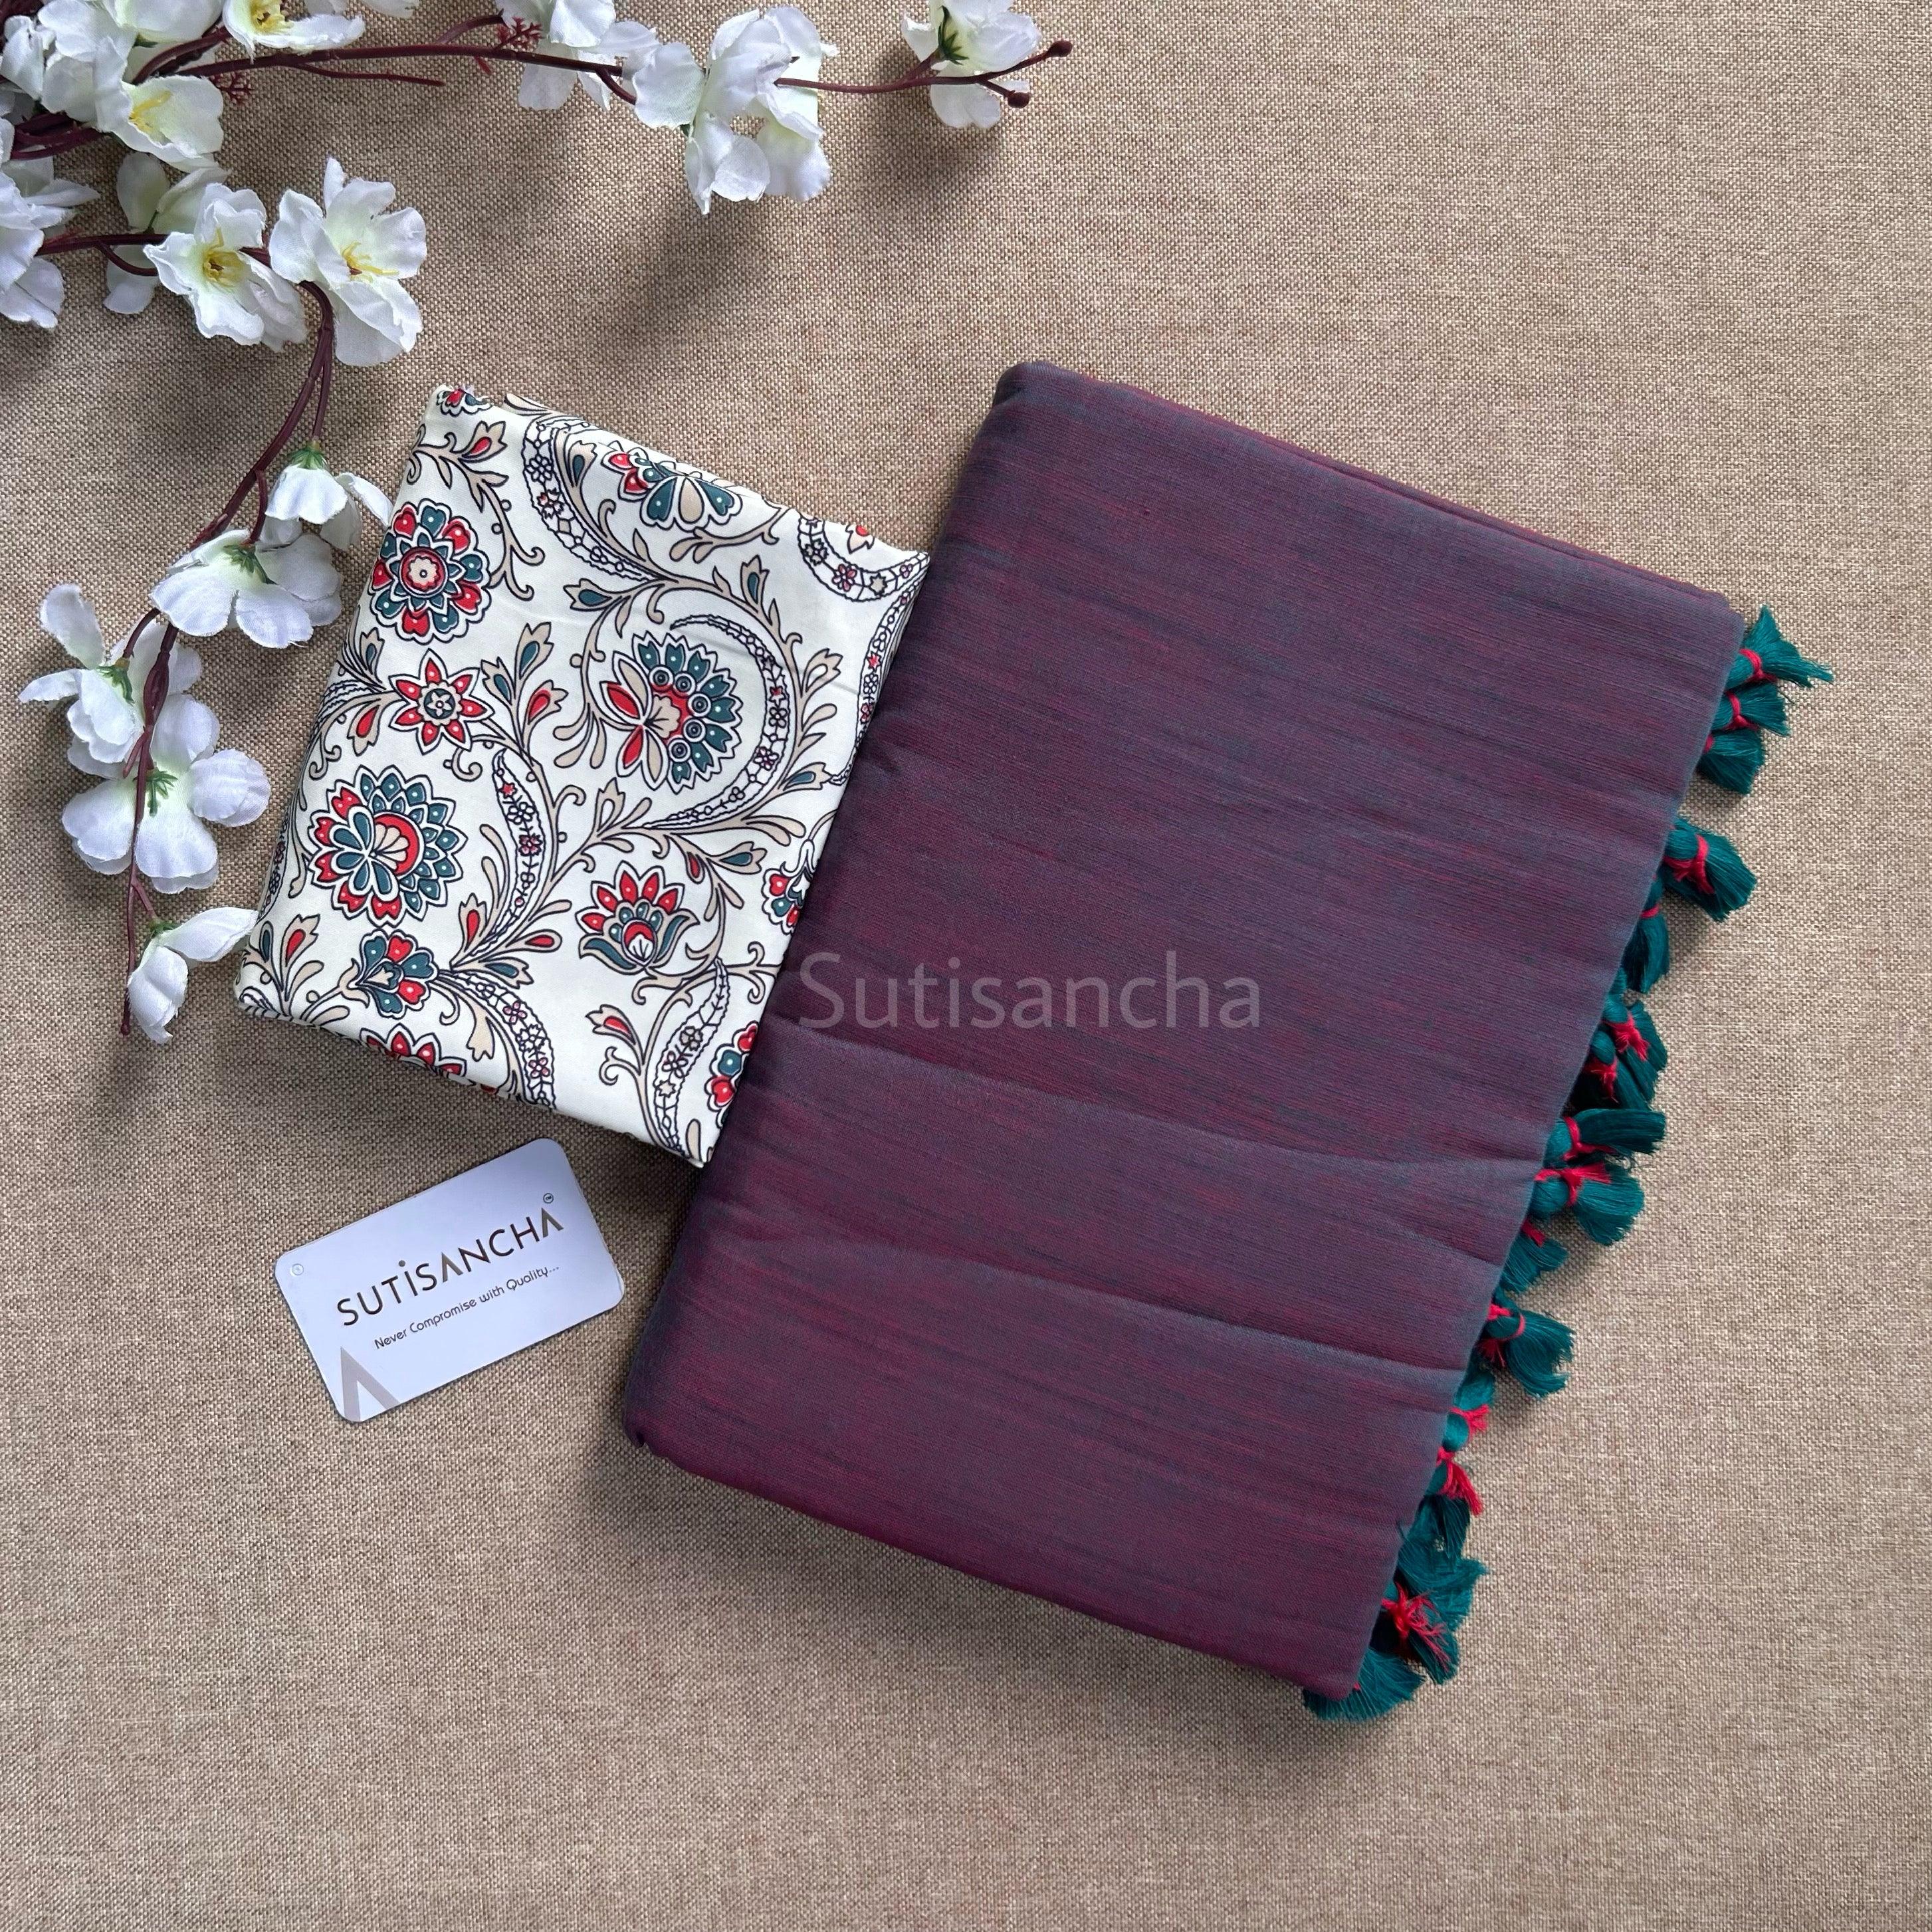 Sutisancha Dual Tone Rama with Cotton Blouse - Suti Sancha